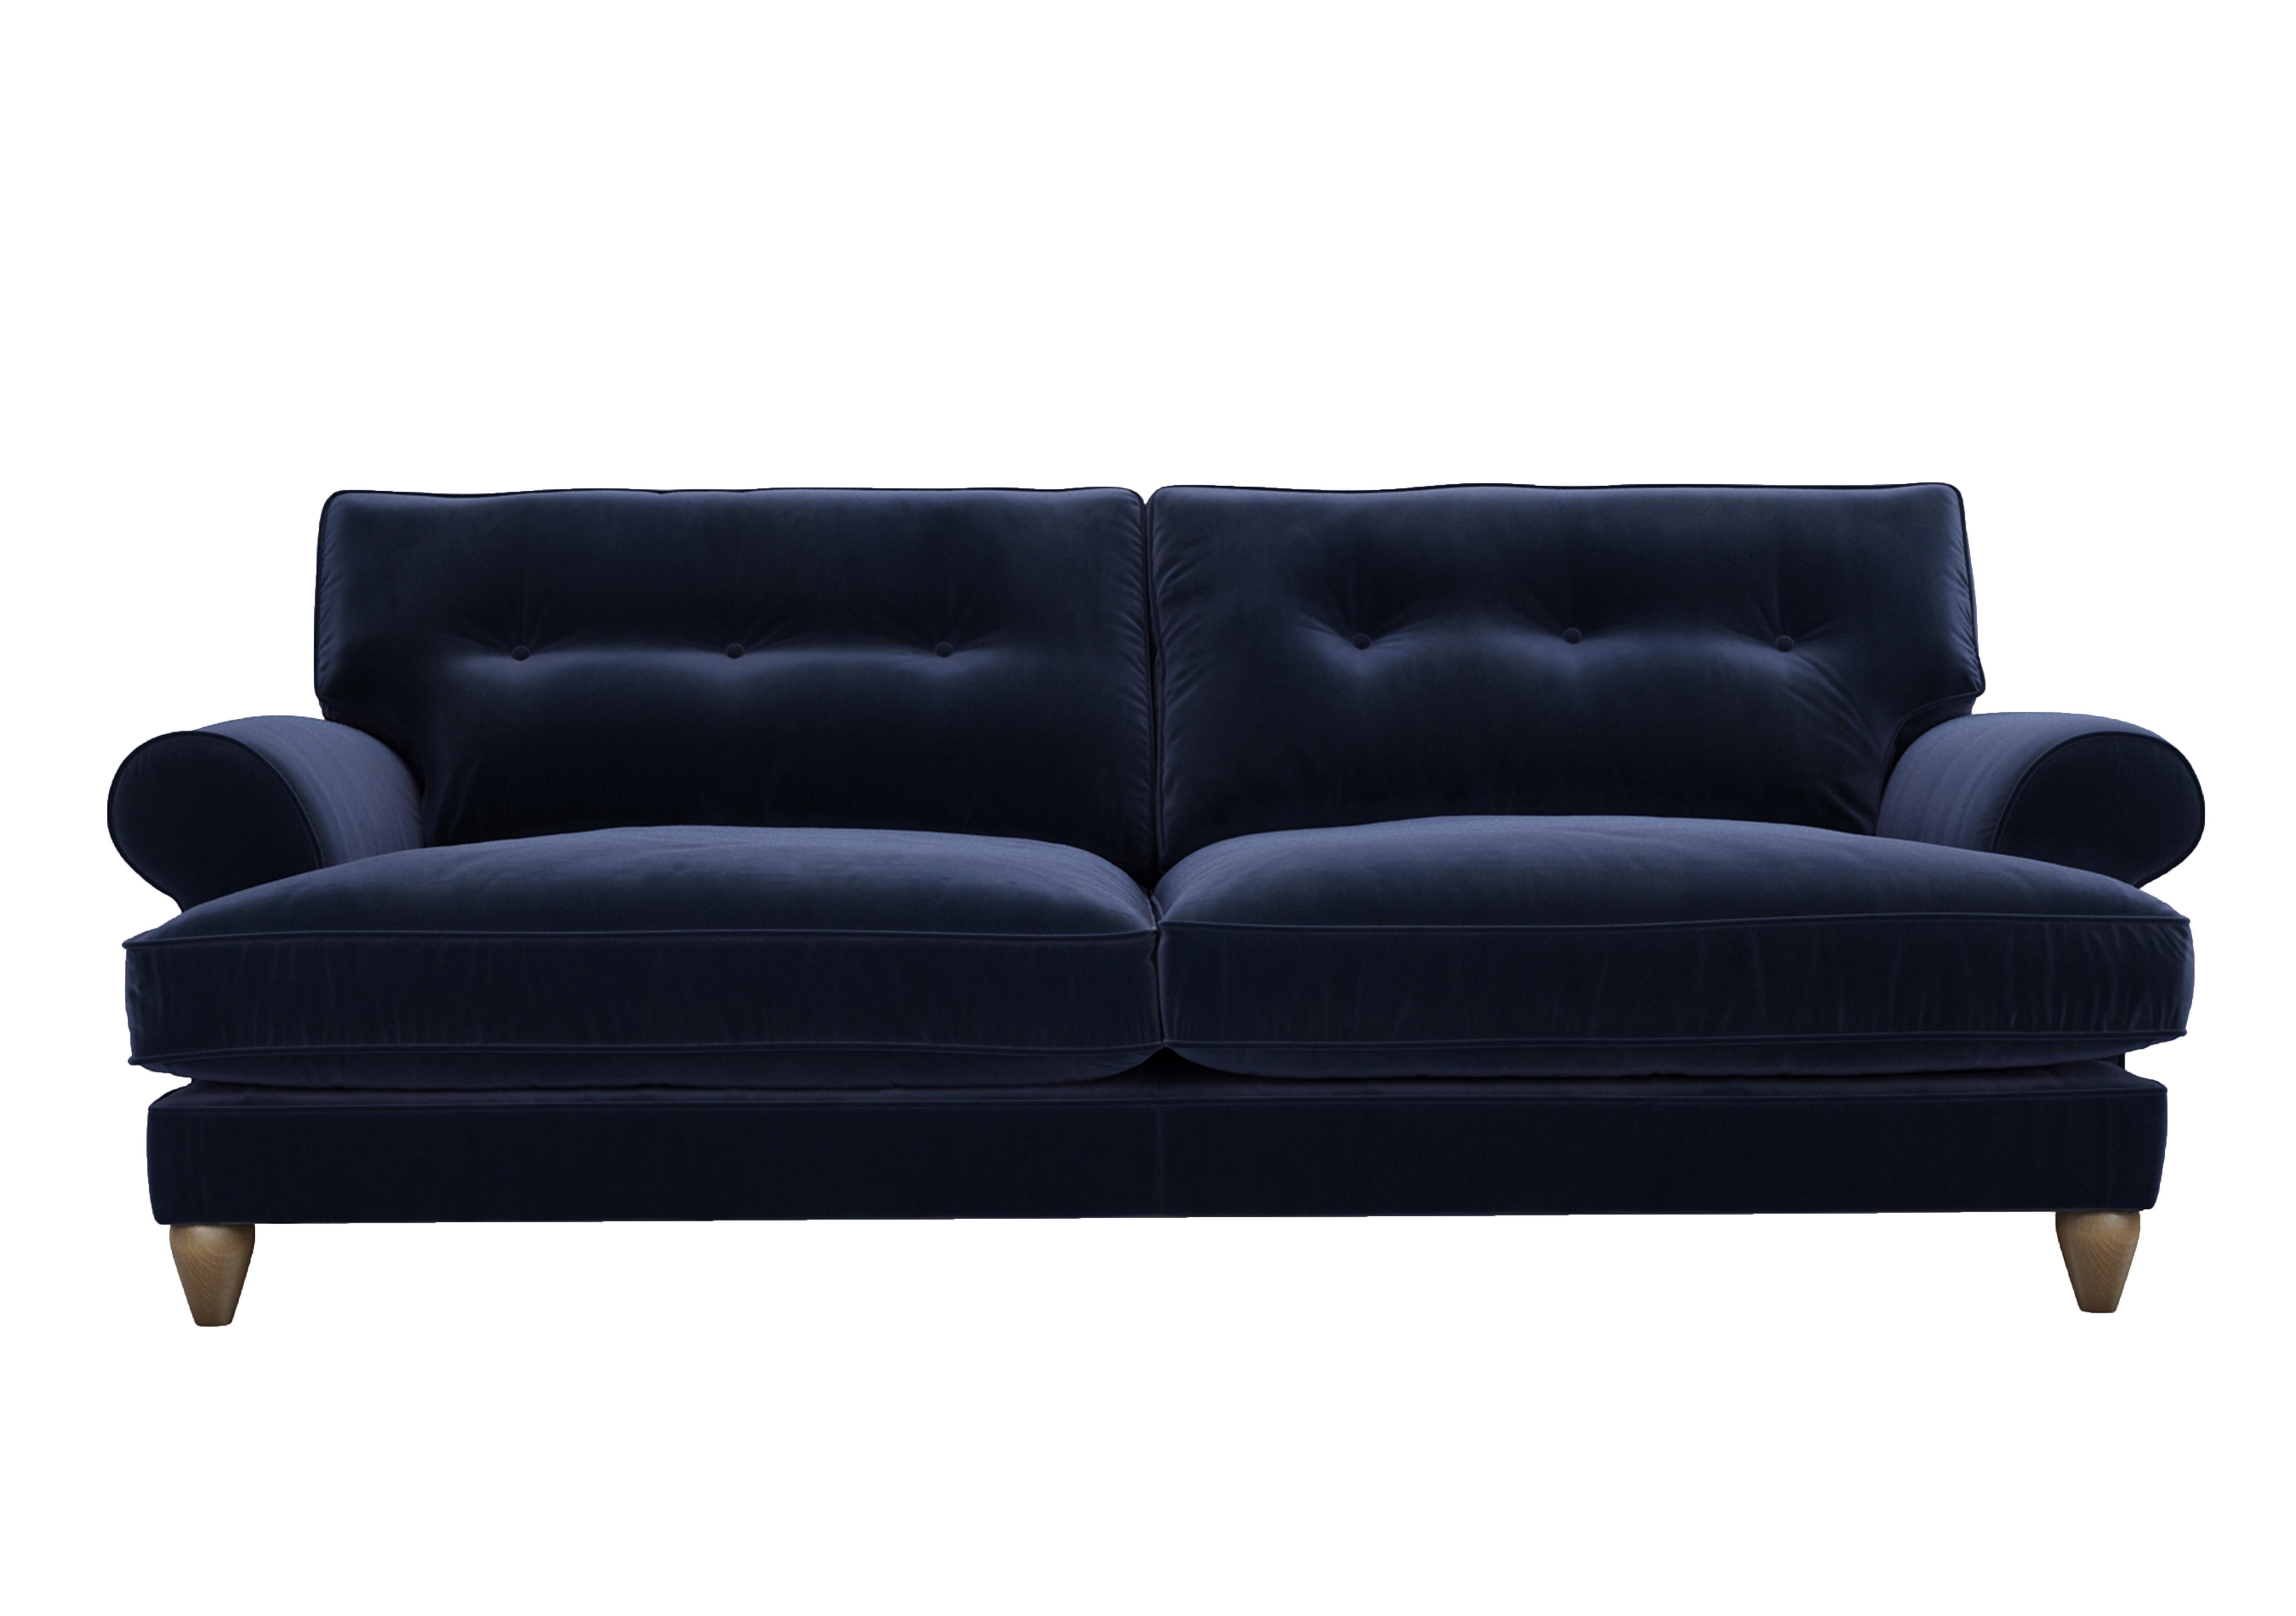 Bronwyn 4 Seater Fabric Classic Back Sofa in Mid009 Midnight Indigo on Furniture Village